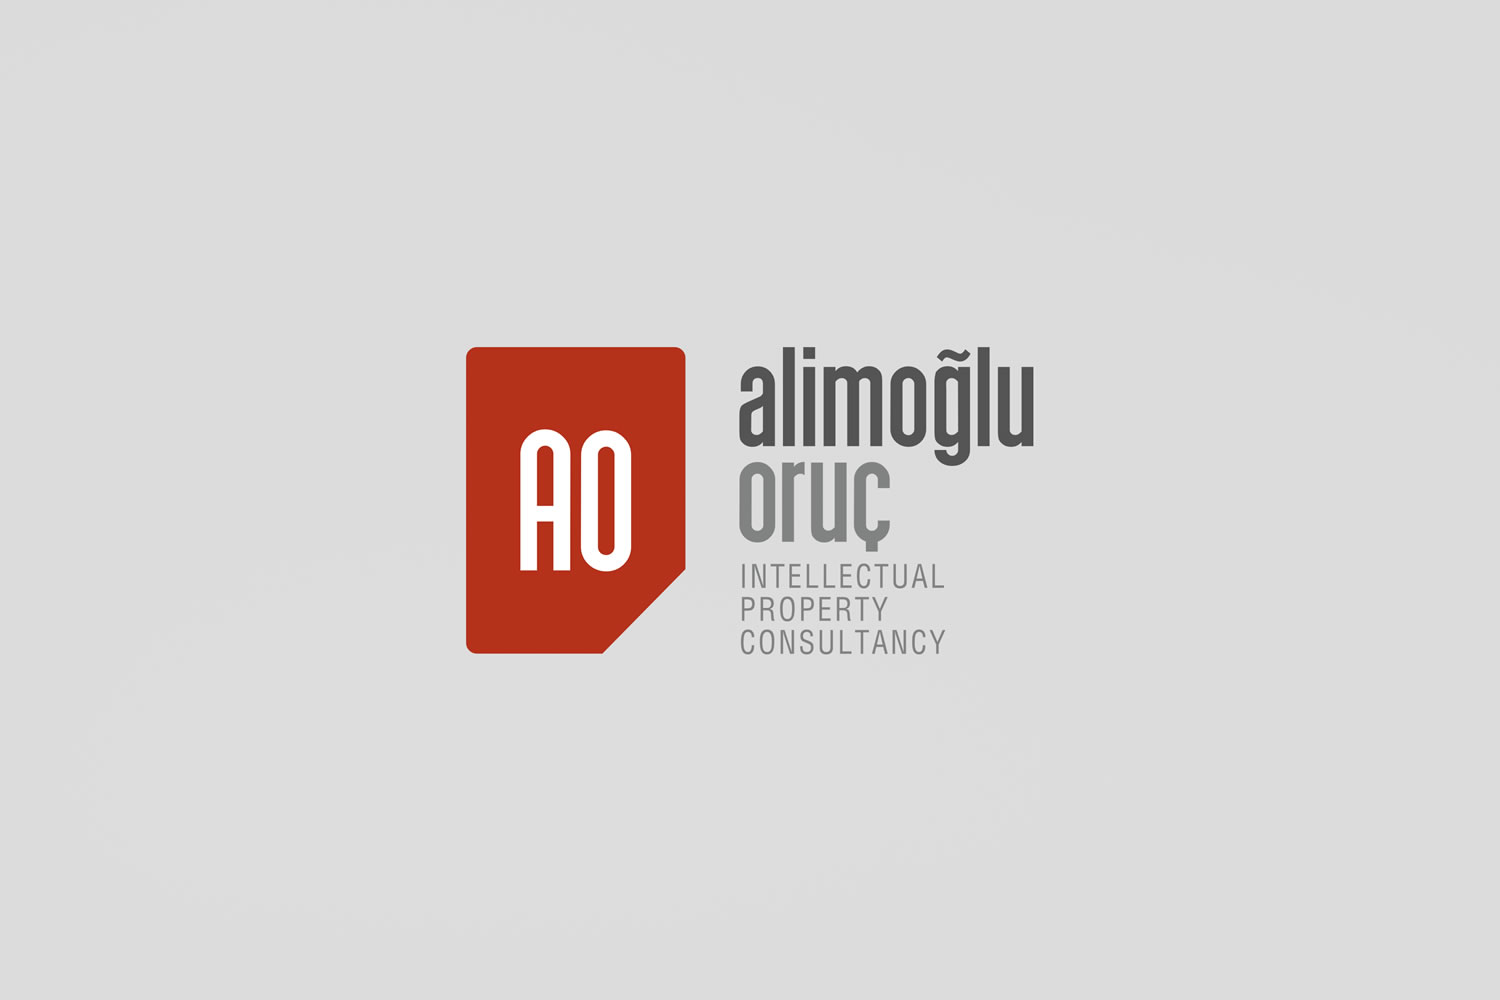 Corporate Branding & Website Design for Alimoglu Oruc